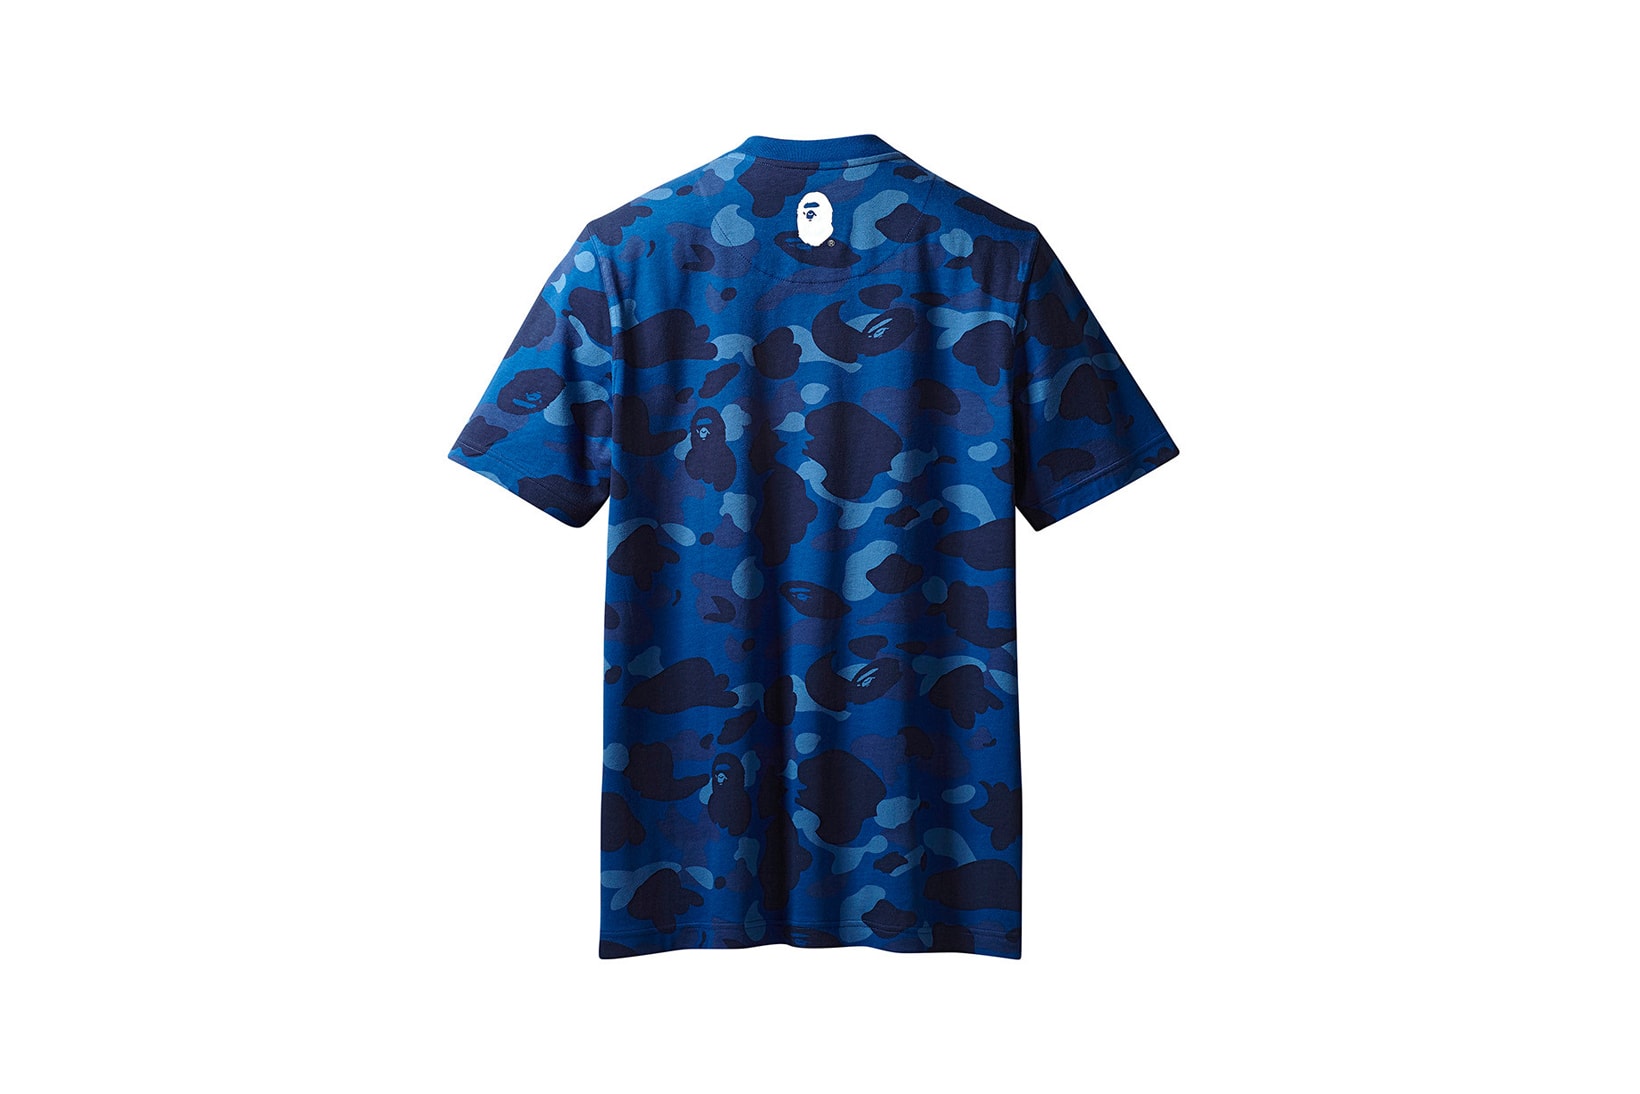 BAPE x adidas Originals Collection T-shirt Blue